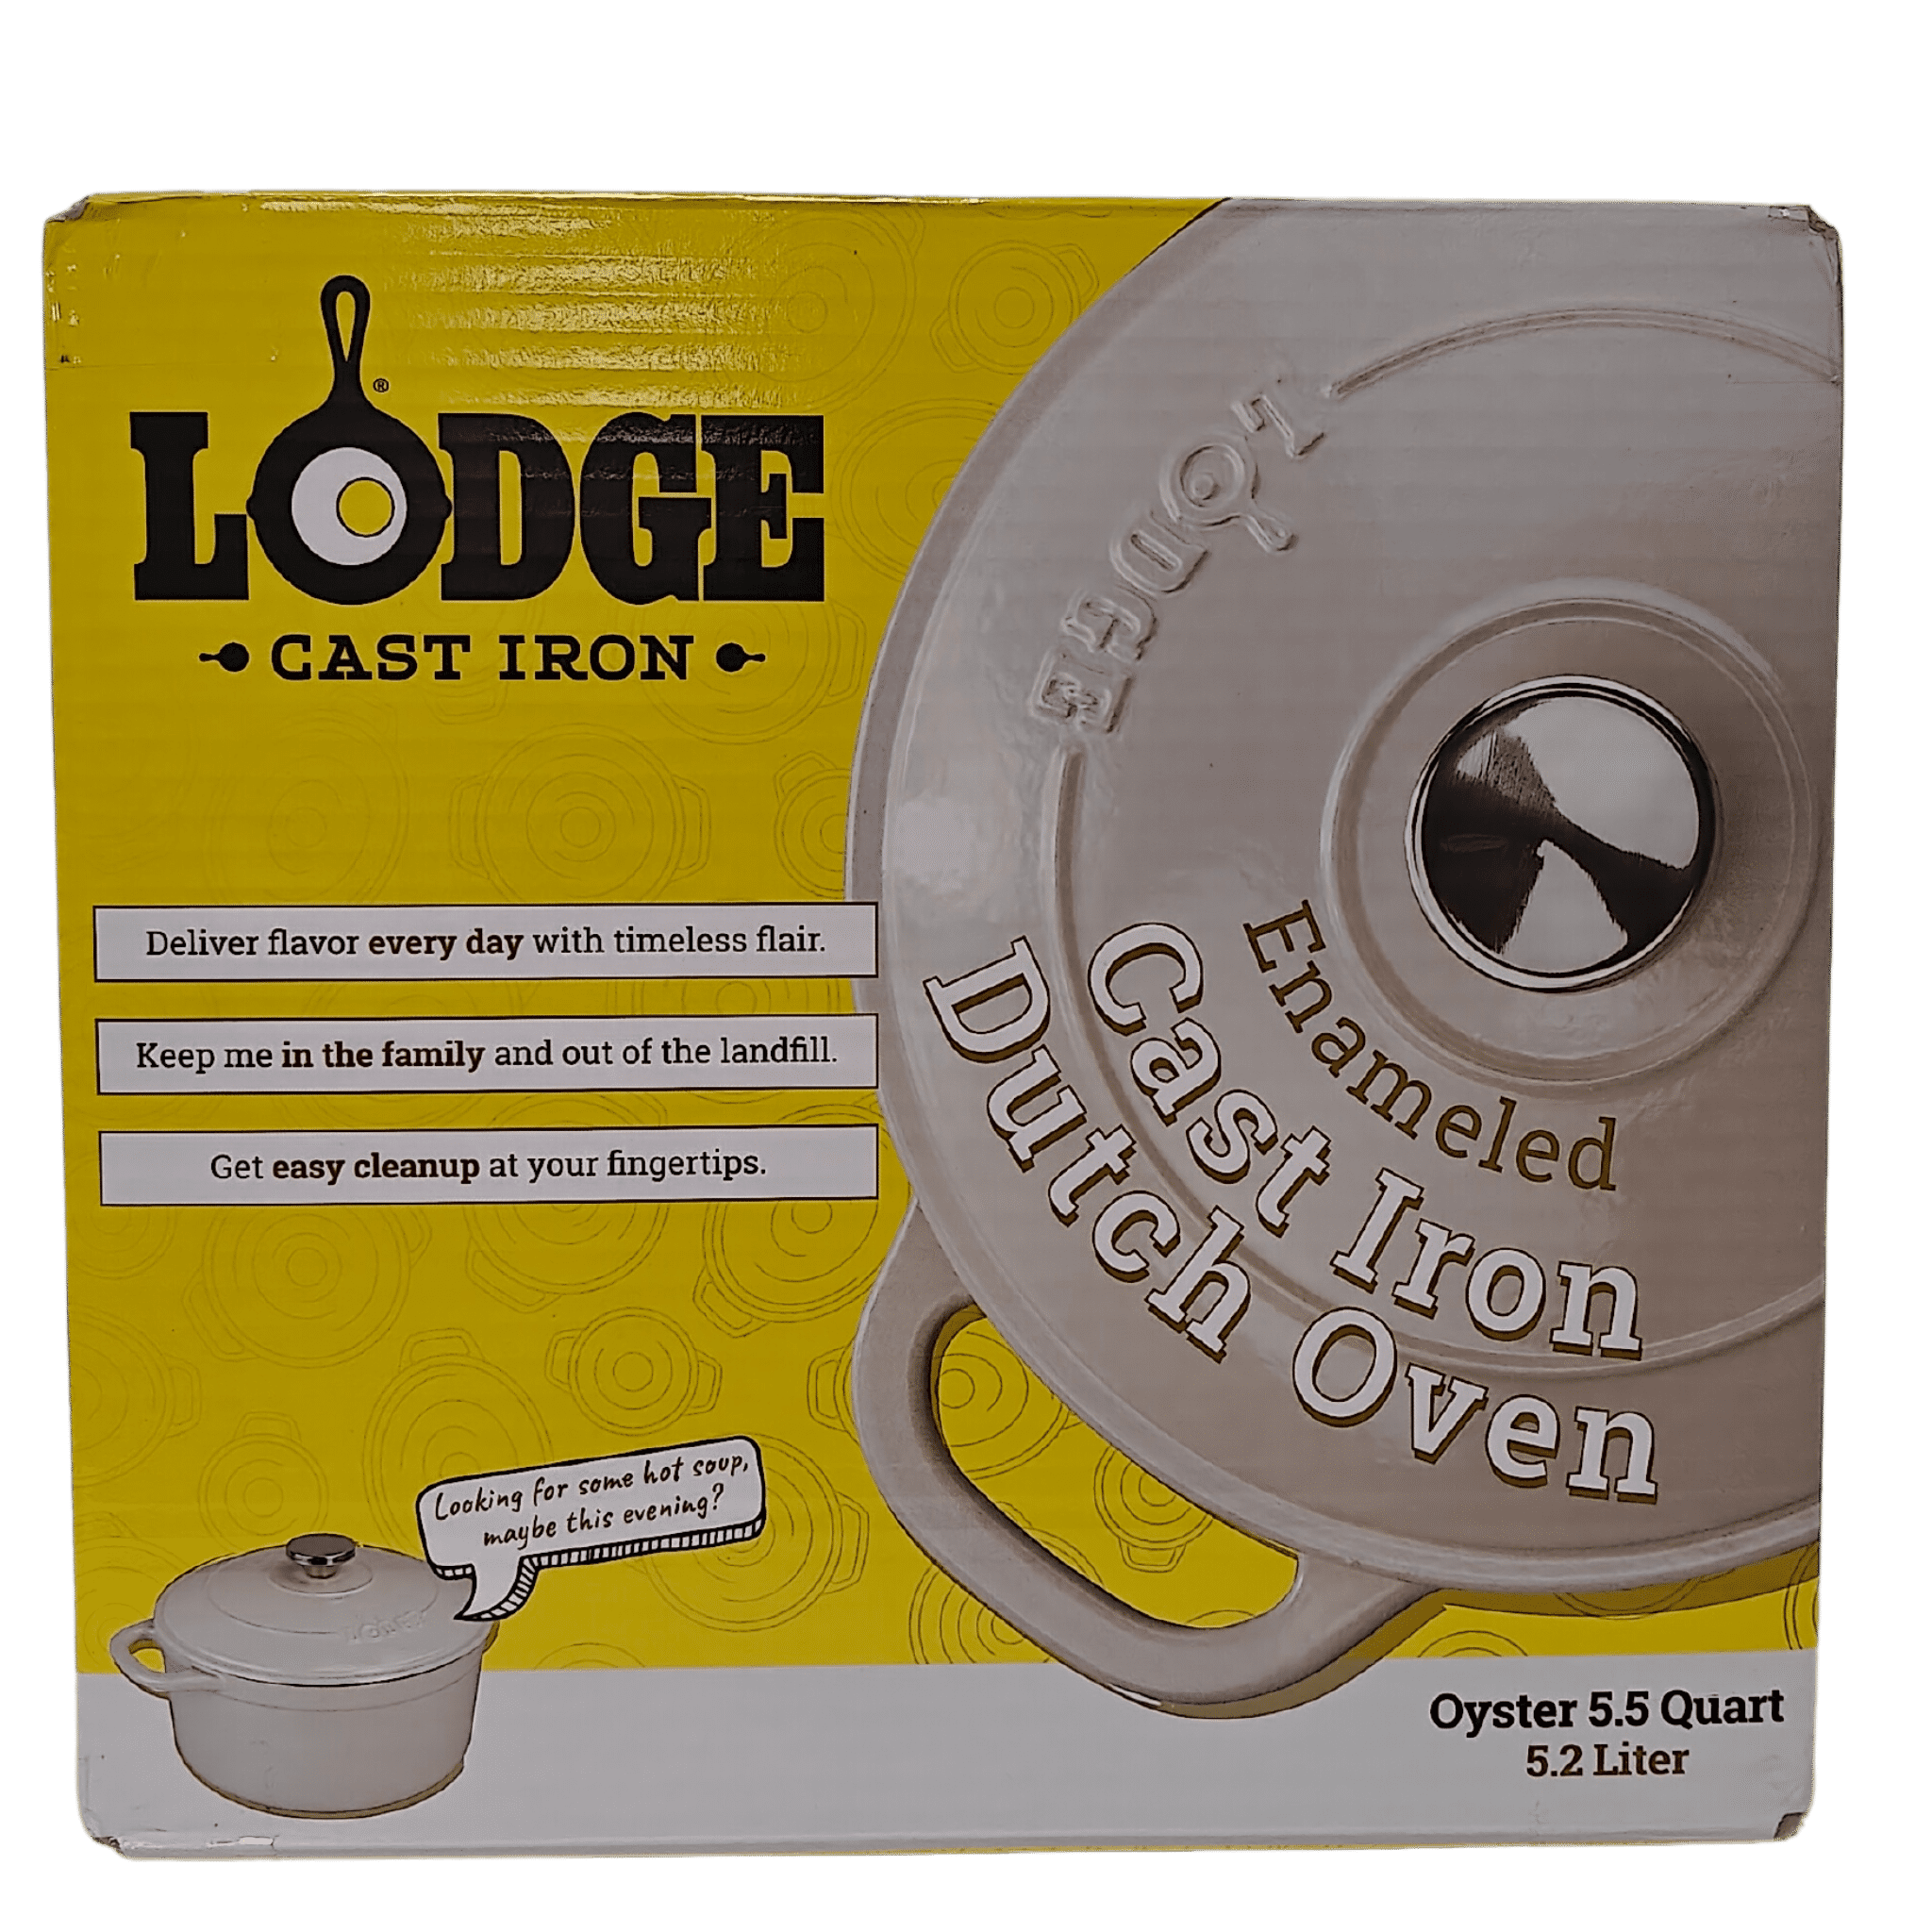 Lodge Enameled Cast Iron Dutch Oven, Blue, 5.5 qt